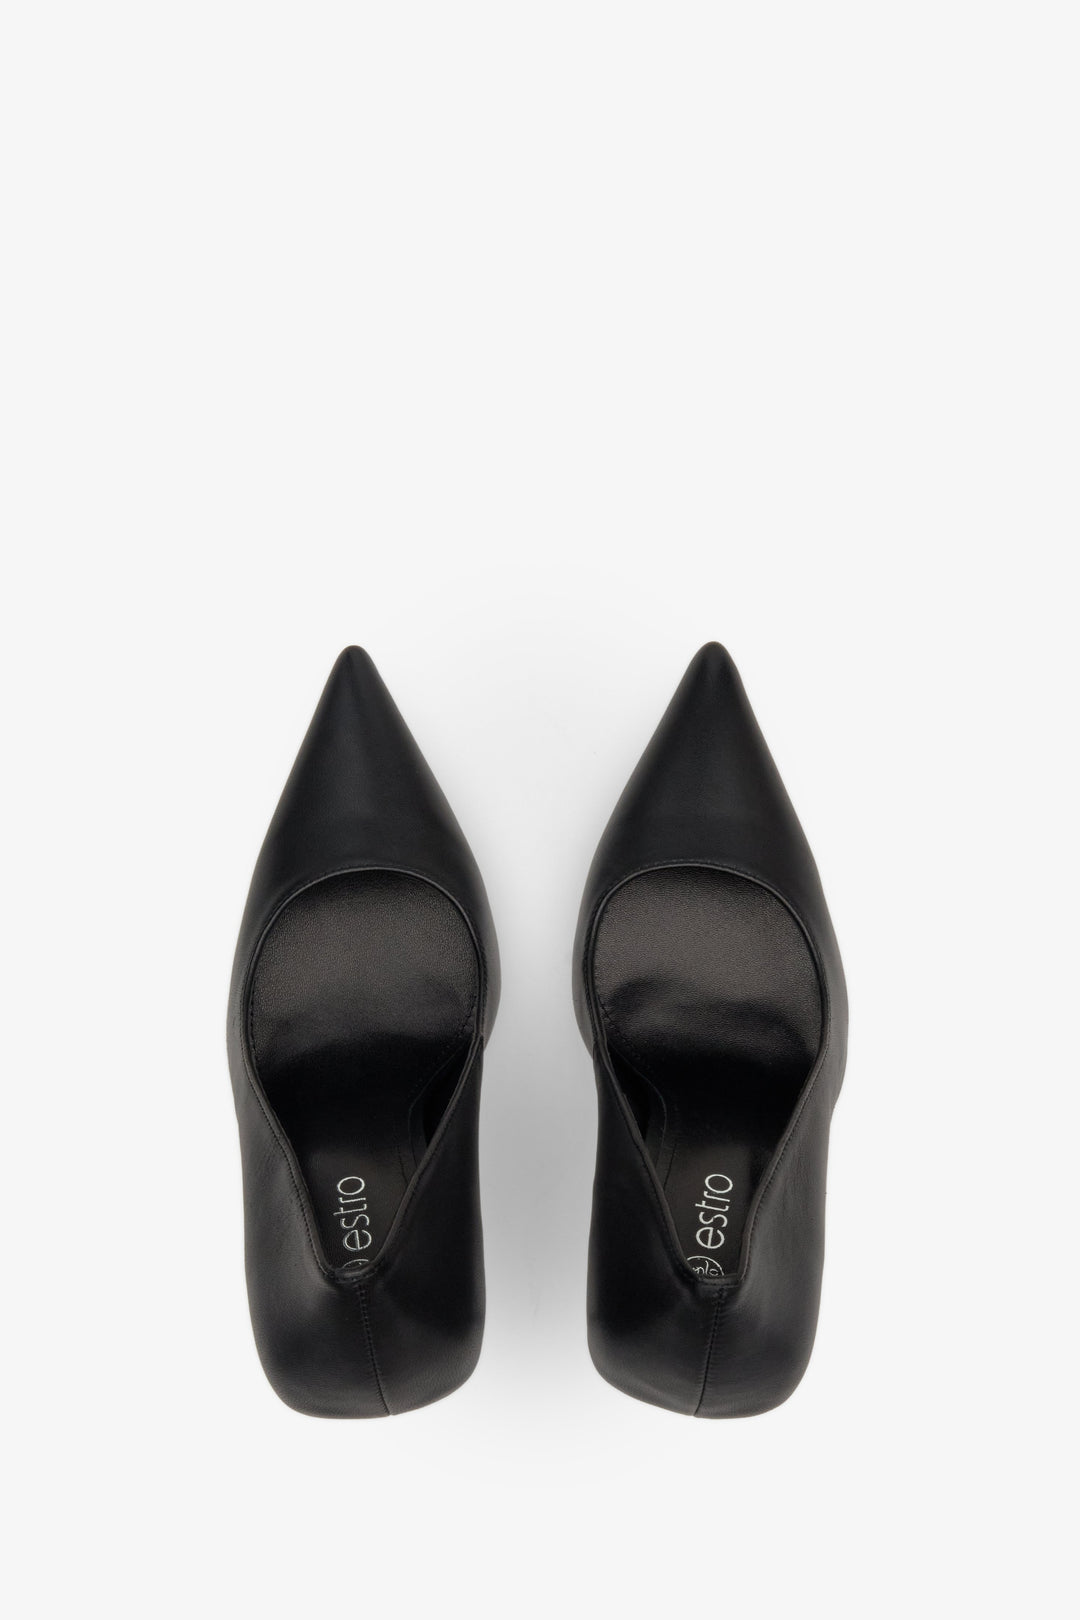 Women's black stiletto heels made of matte genuine leather - top view presentation of footwear.